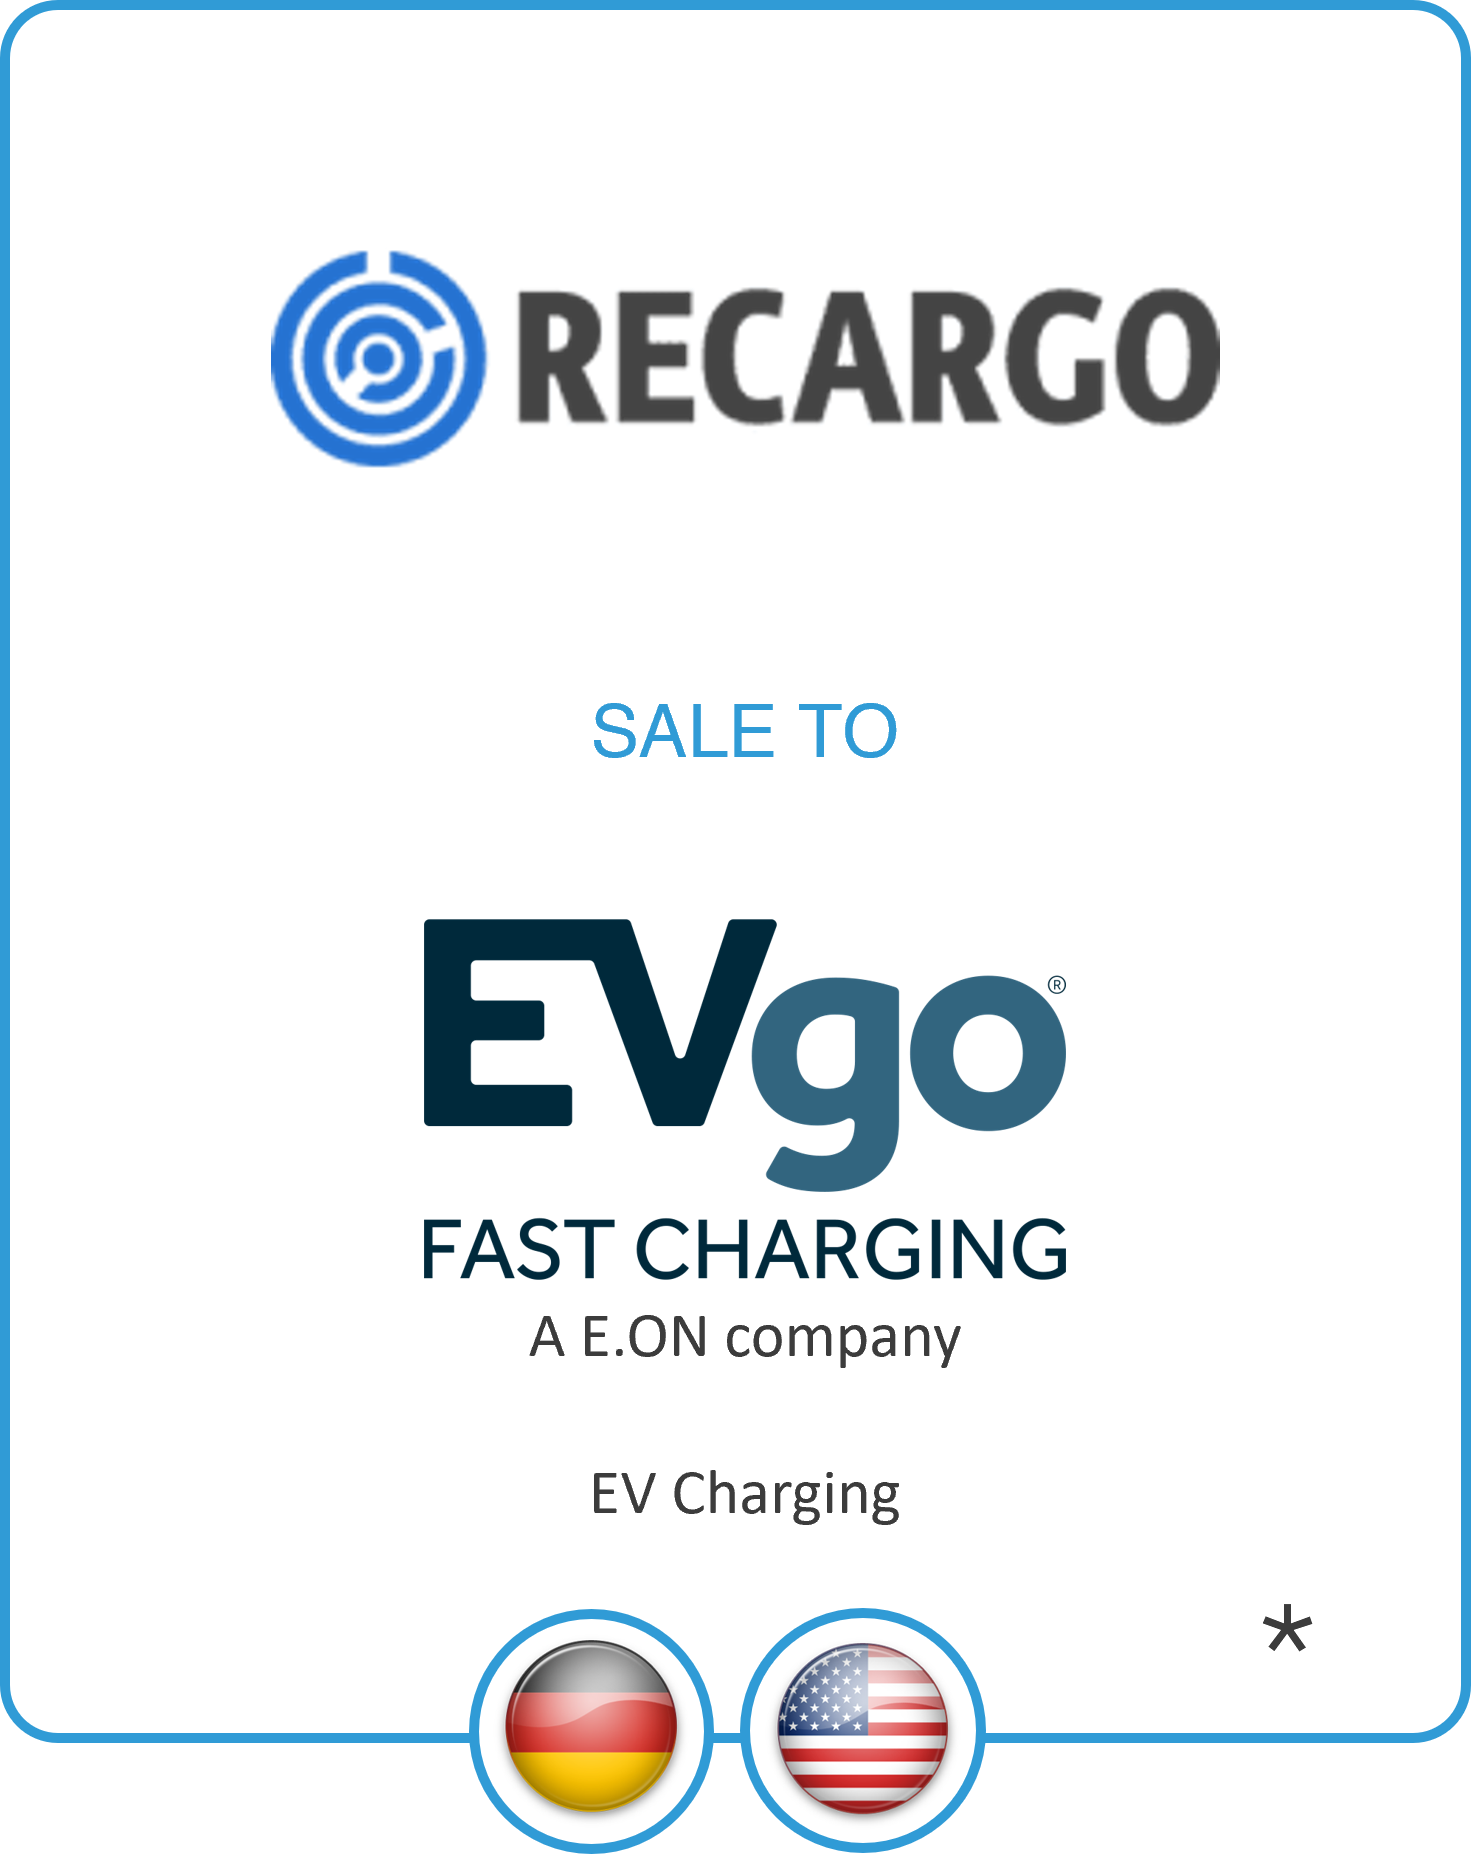 Drake Star Partners Advises E.On On The Sale Of Recargo To Evgo*